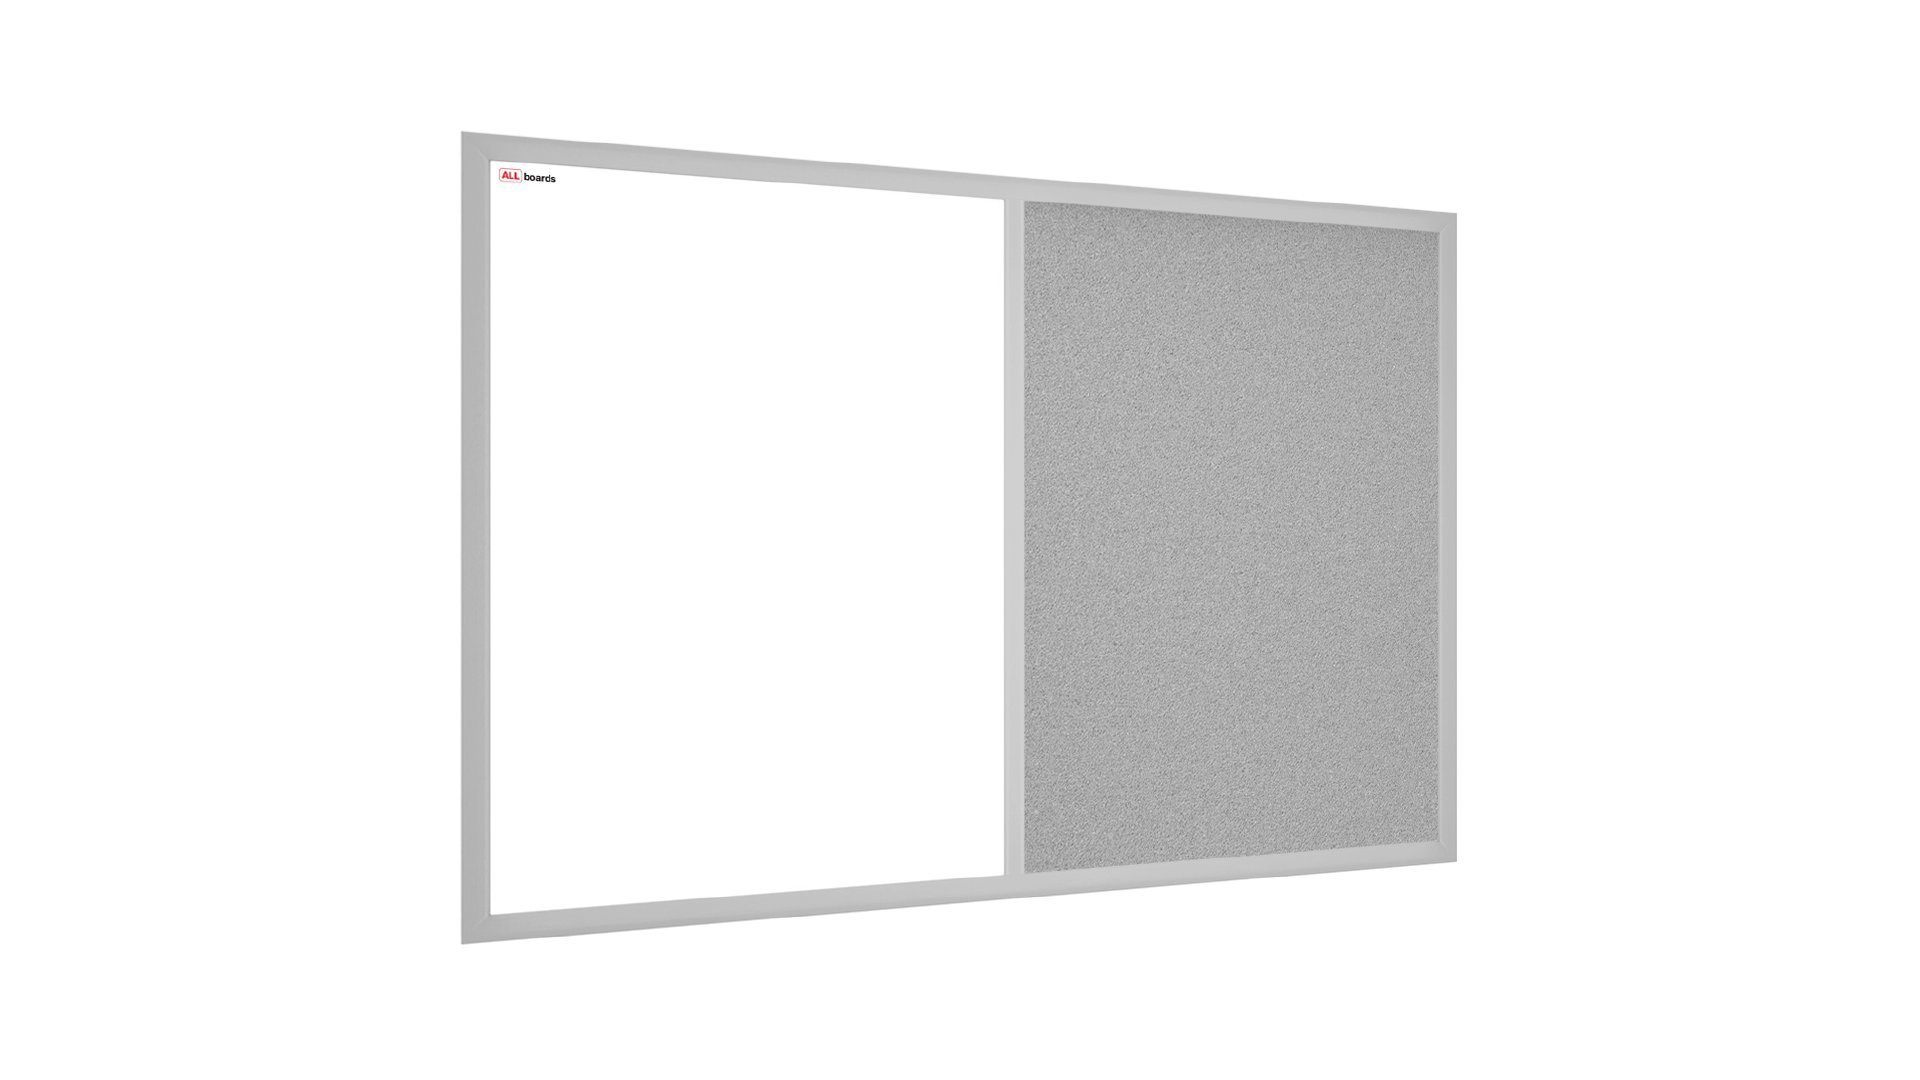 ALLboards Tafel Kombitafel, Kork grau / magnetisch weiß, Holzrahmen grau lackiert